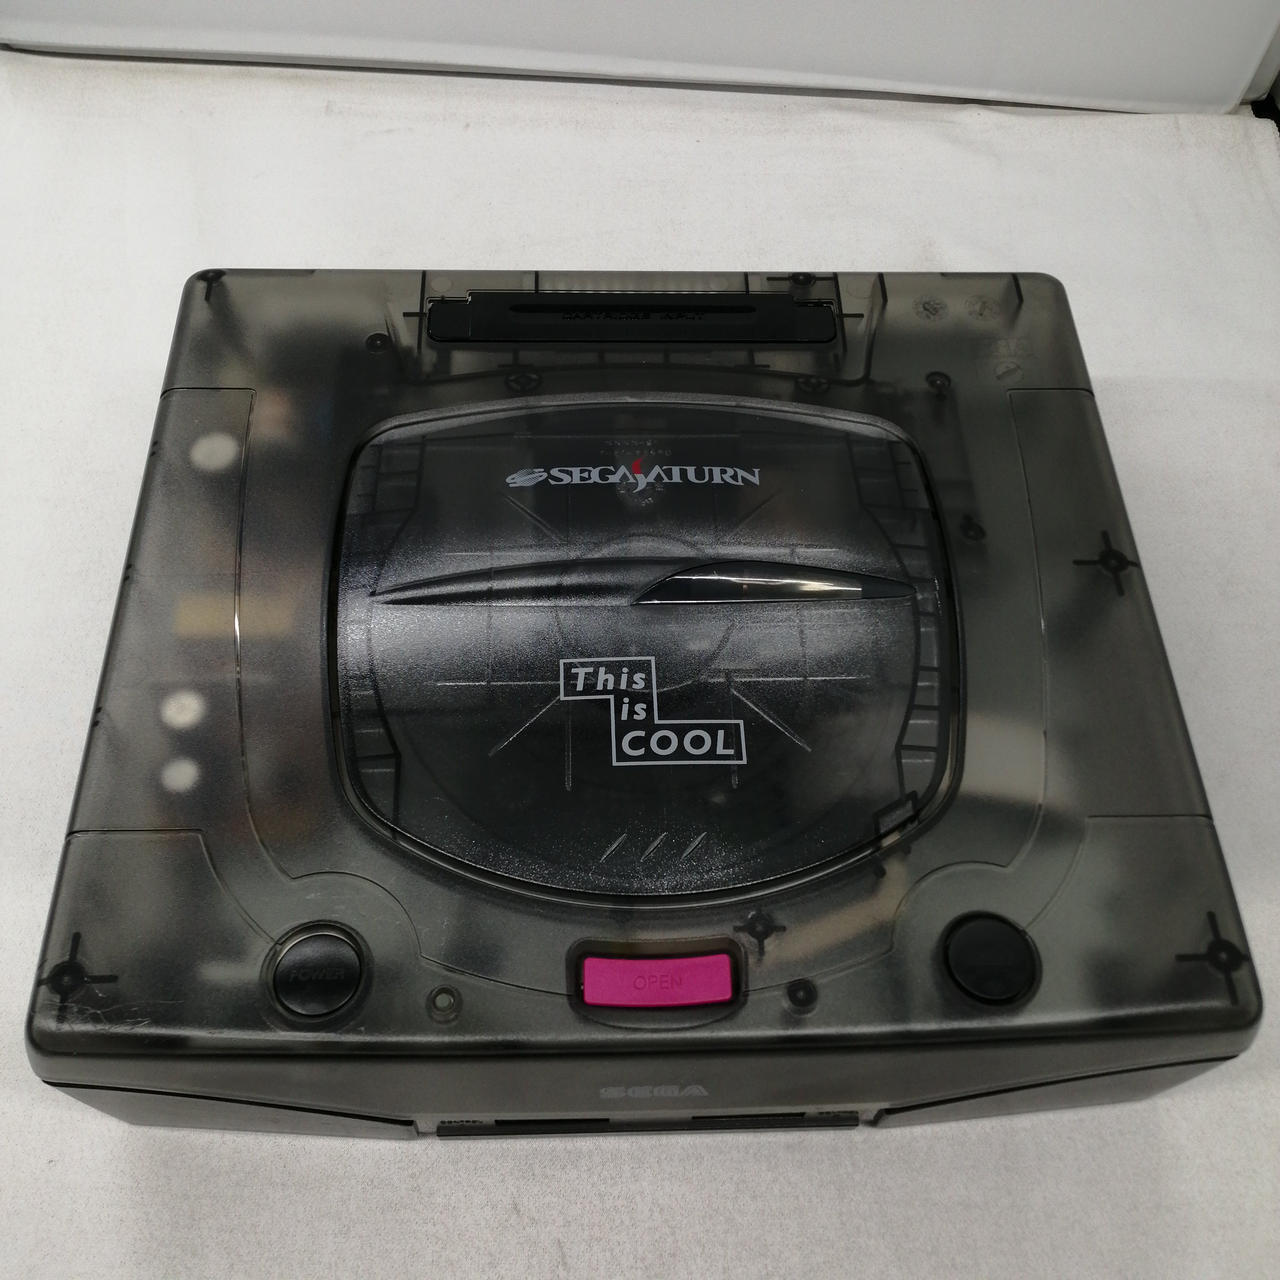 81-100 Sega Hst-3220 Saturn